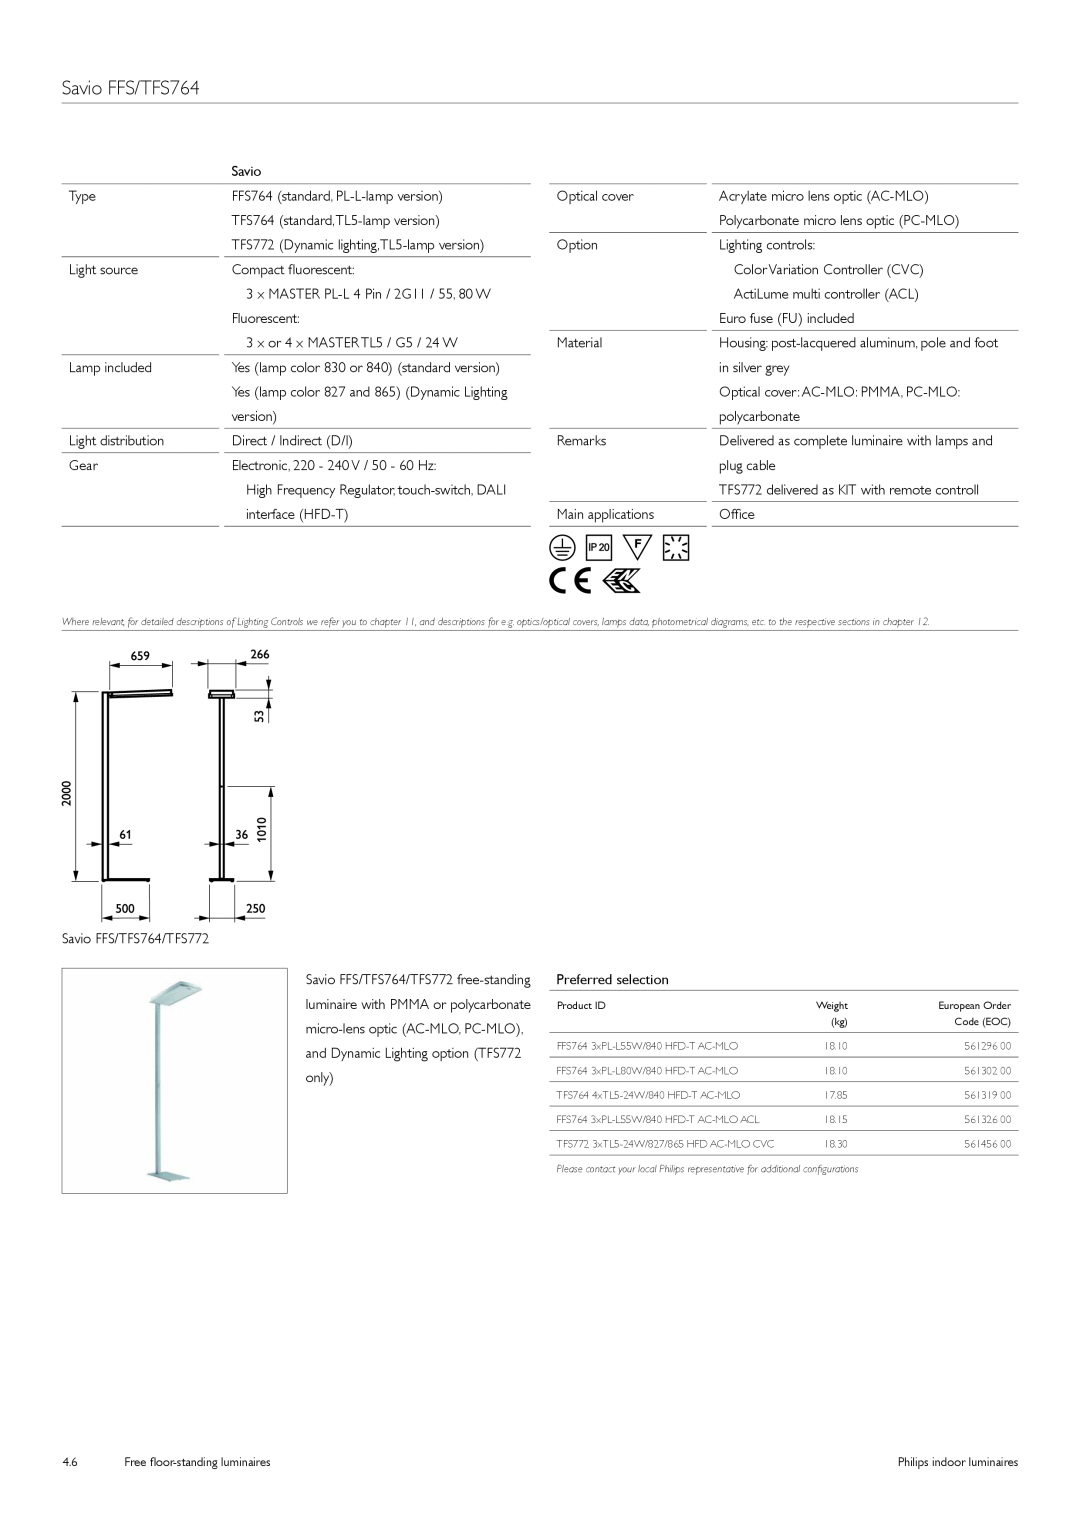 Philips Free Floor-Standing Luminaires manual Savio FFS/TFS764 